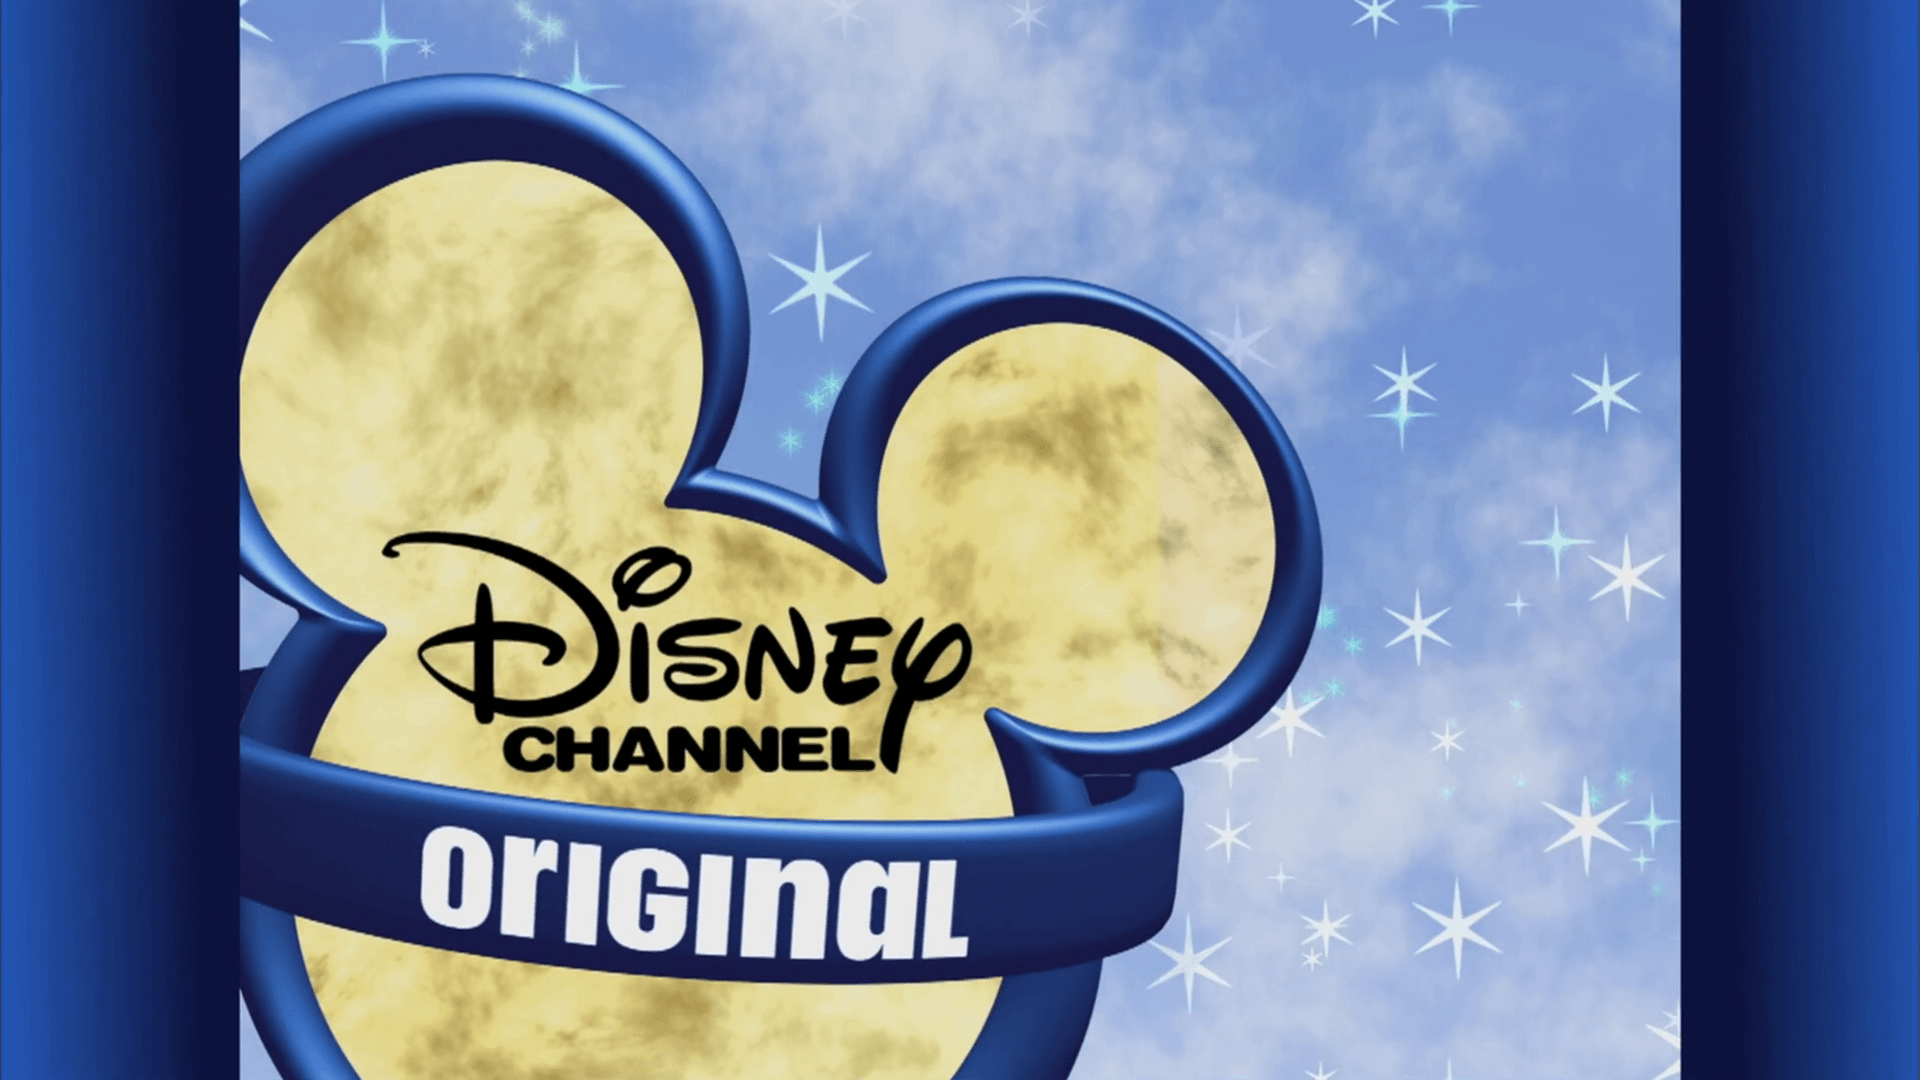 Disney Channel Original Logo - Disney Channel Original 2007.png